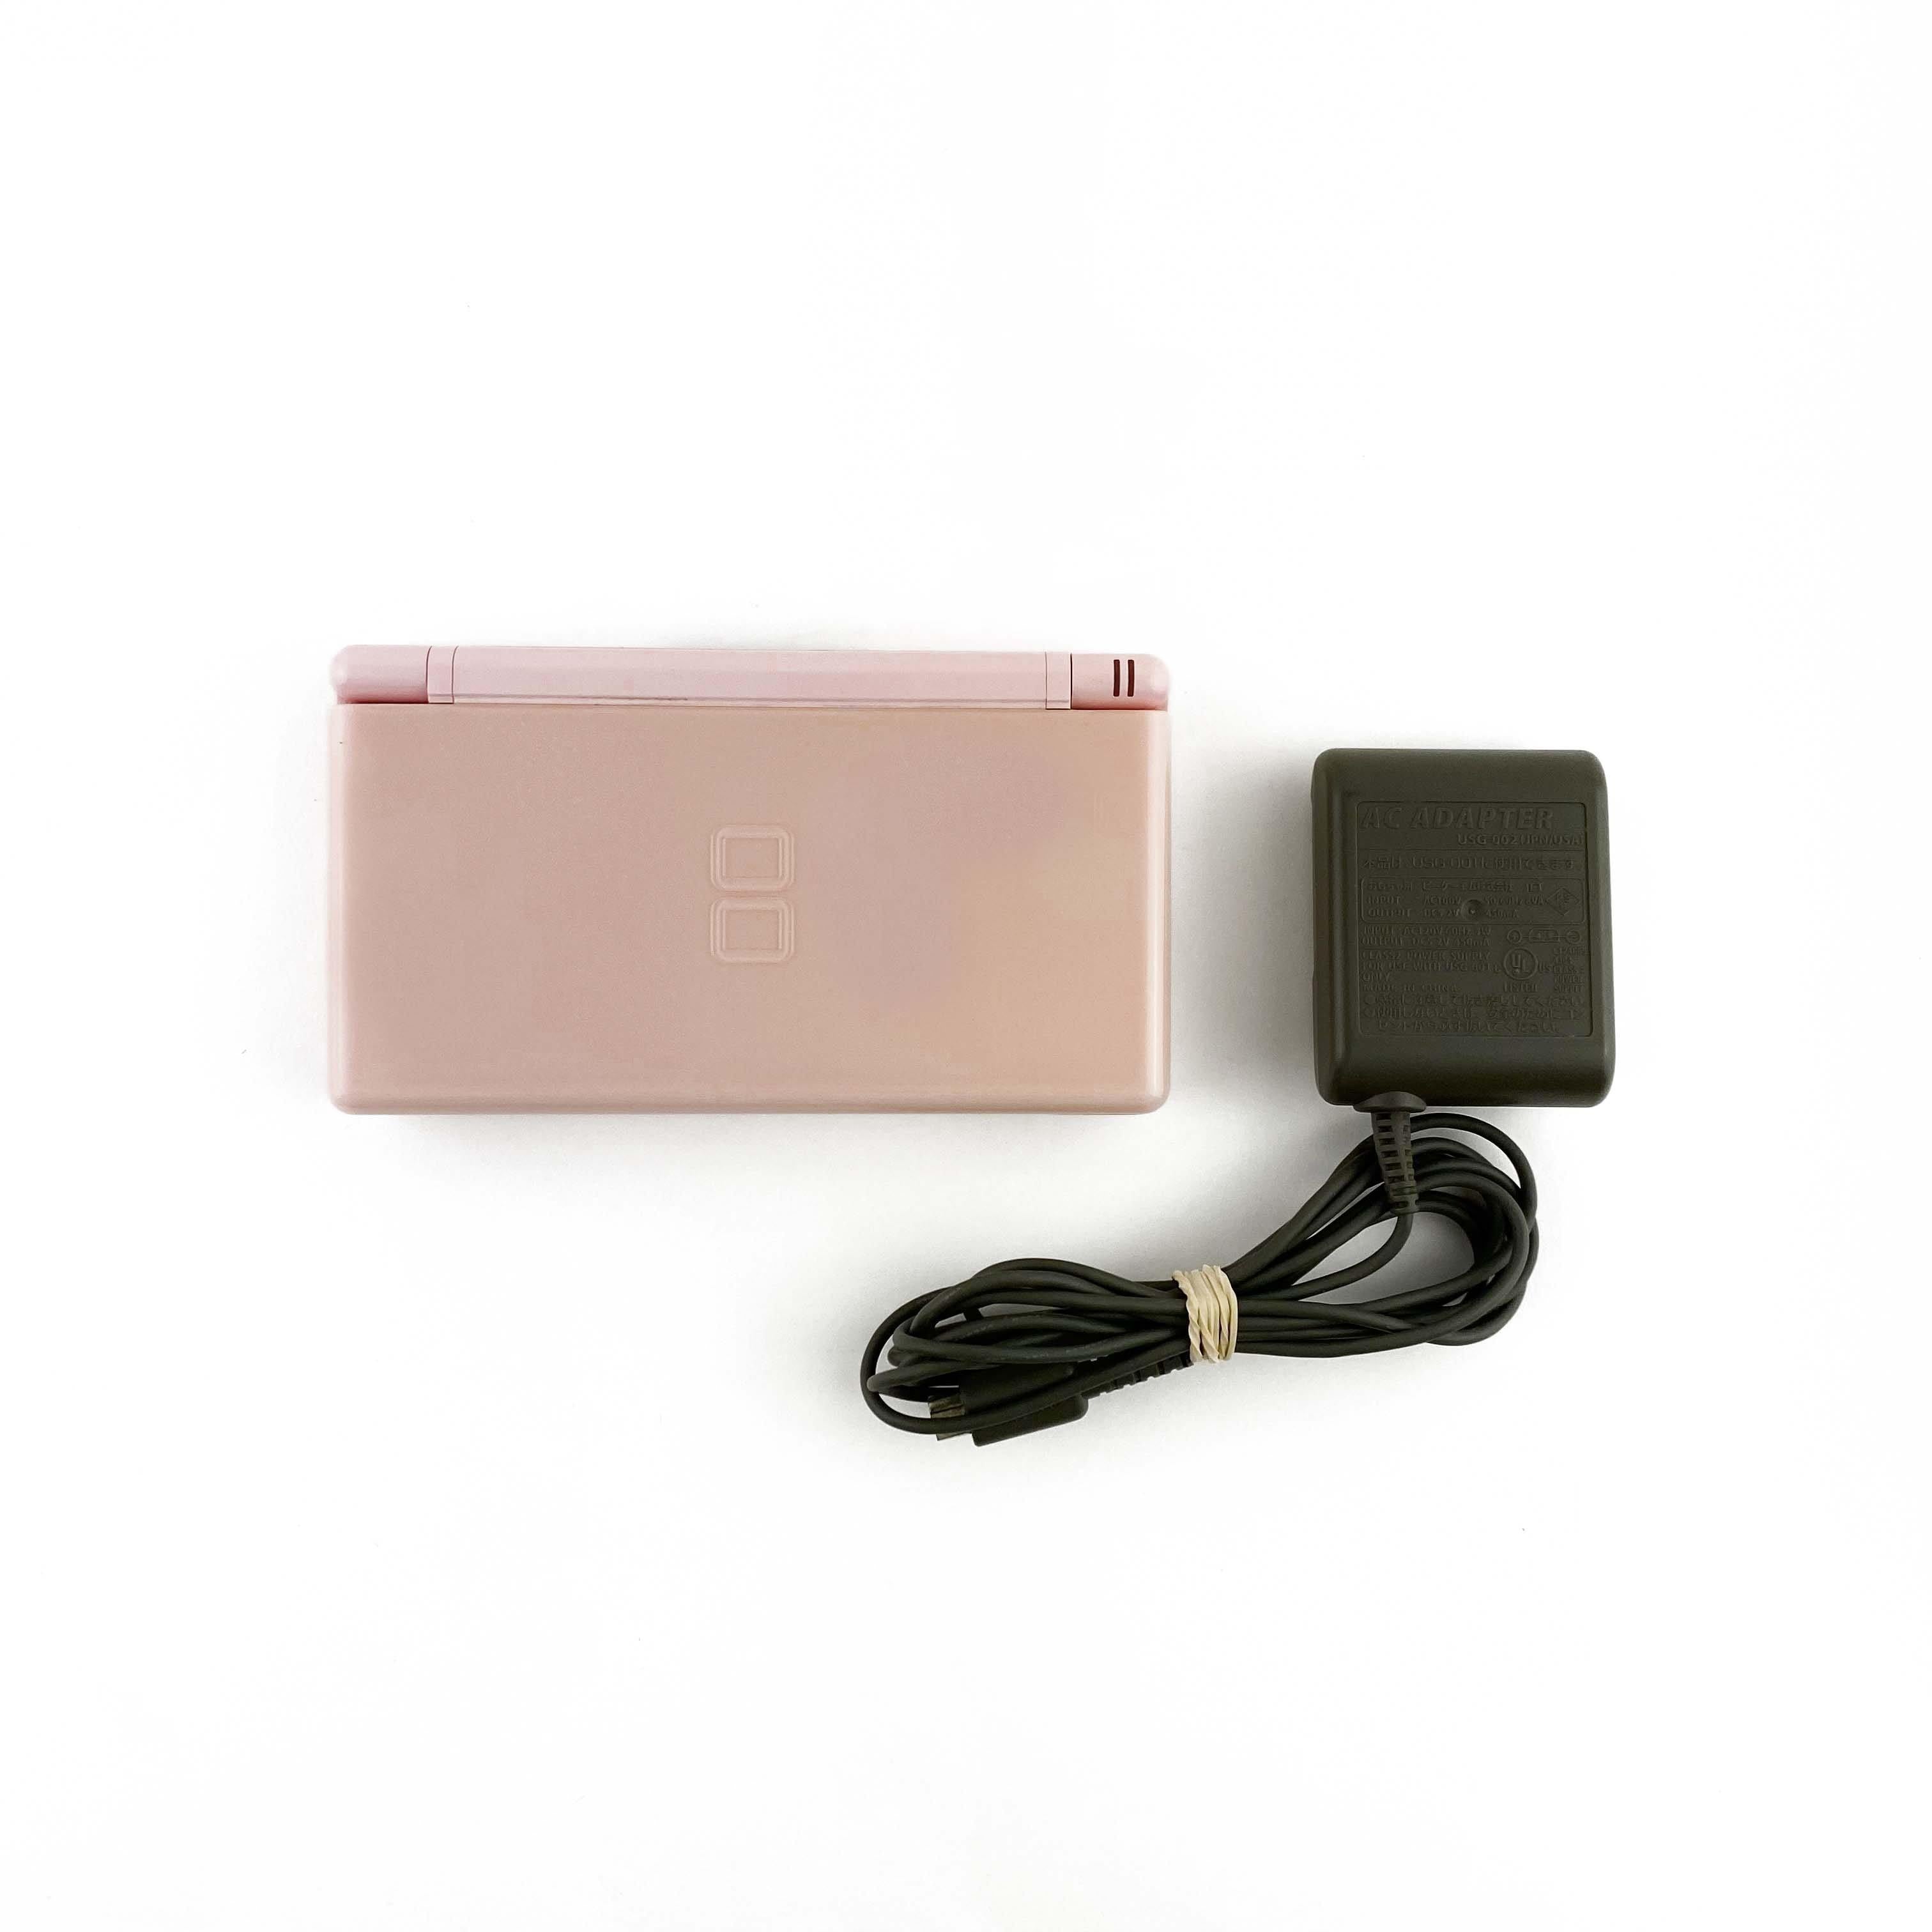 Nintendo DS Lite Coral Pink Handheld Console (USG-001)